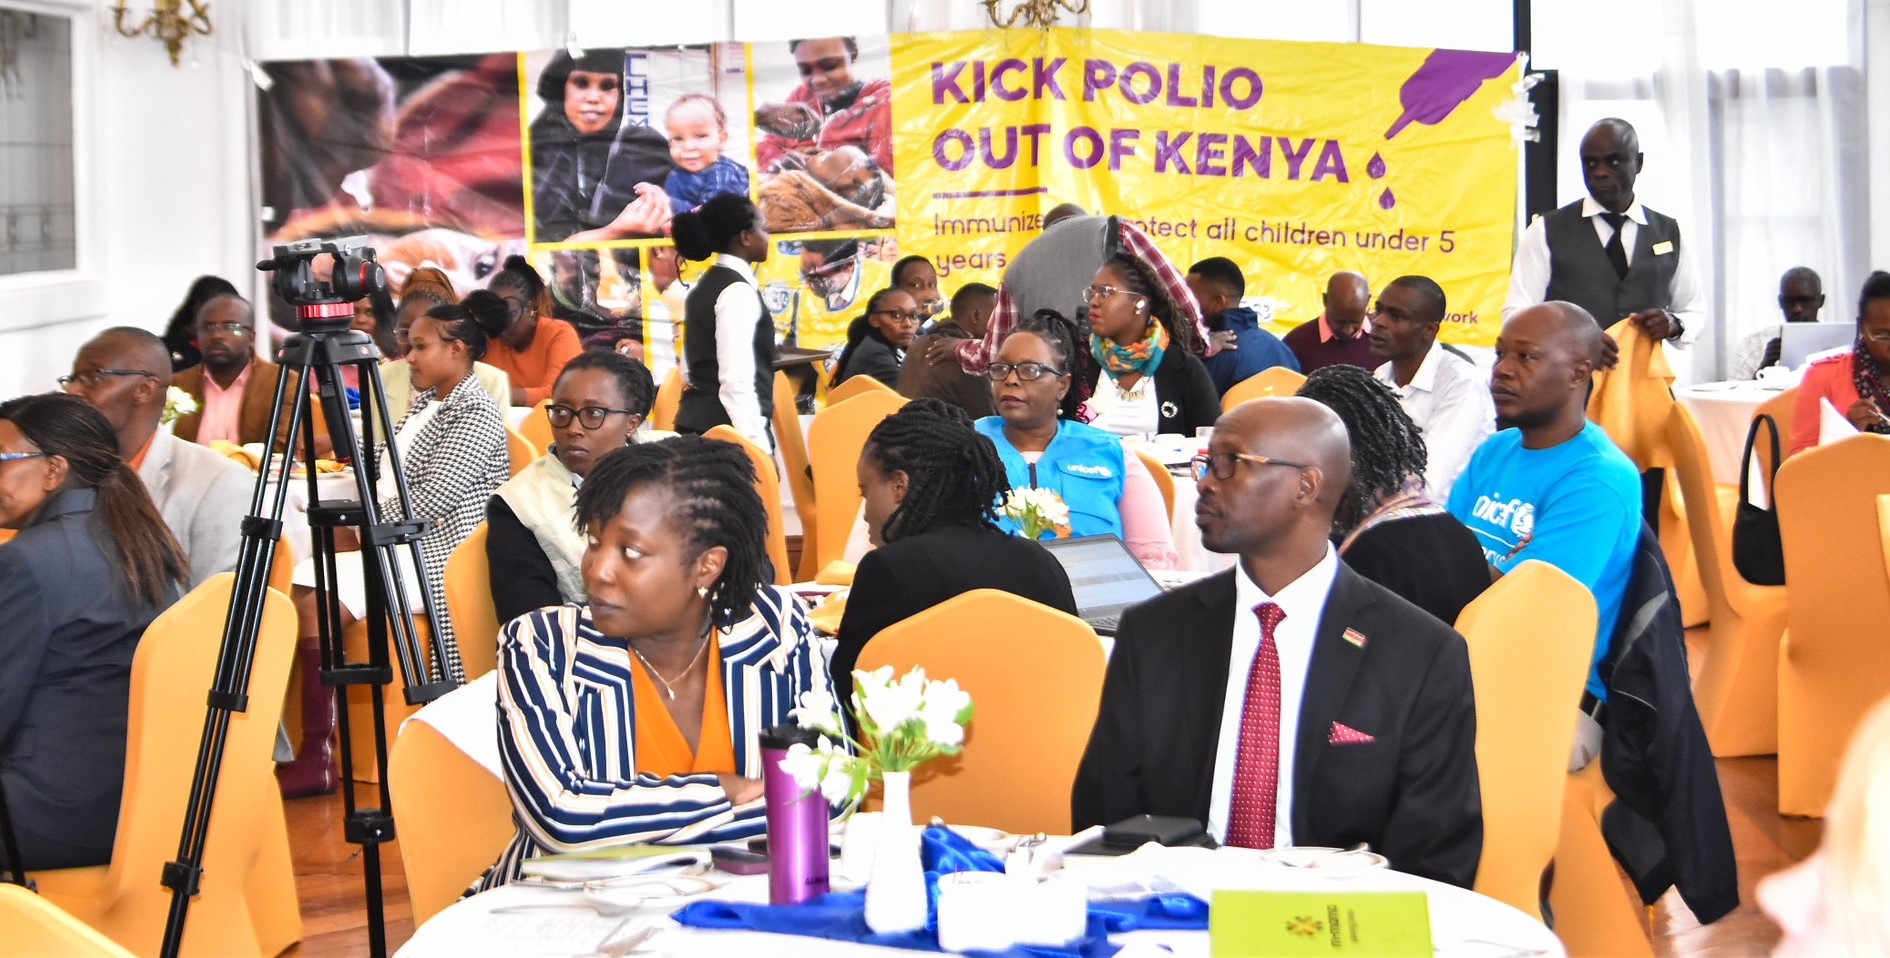 The Battle Against Polio in Kenya